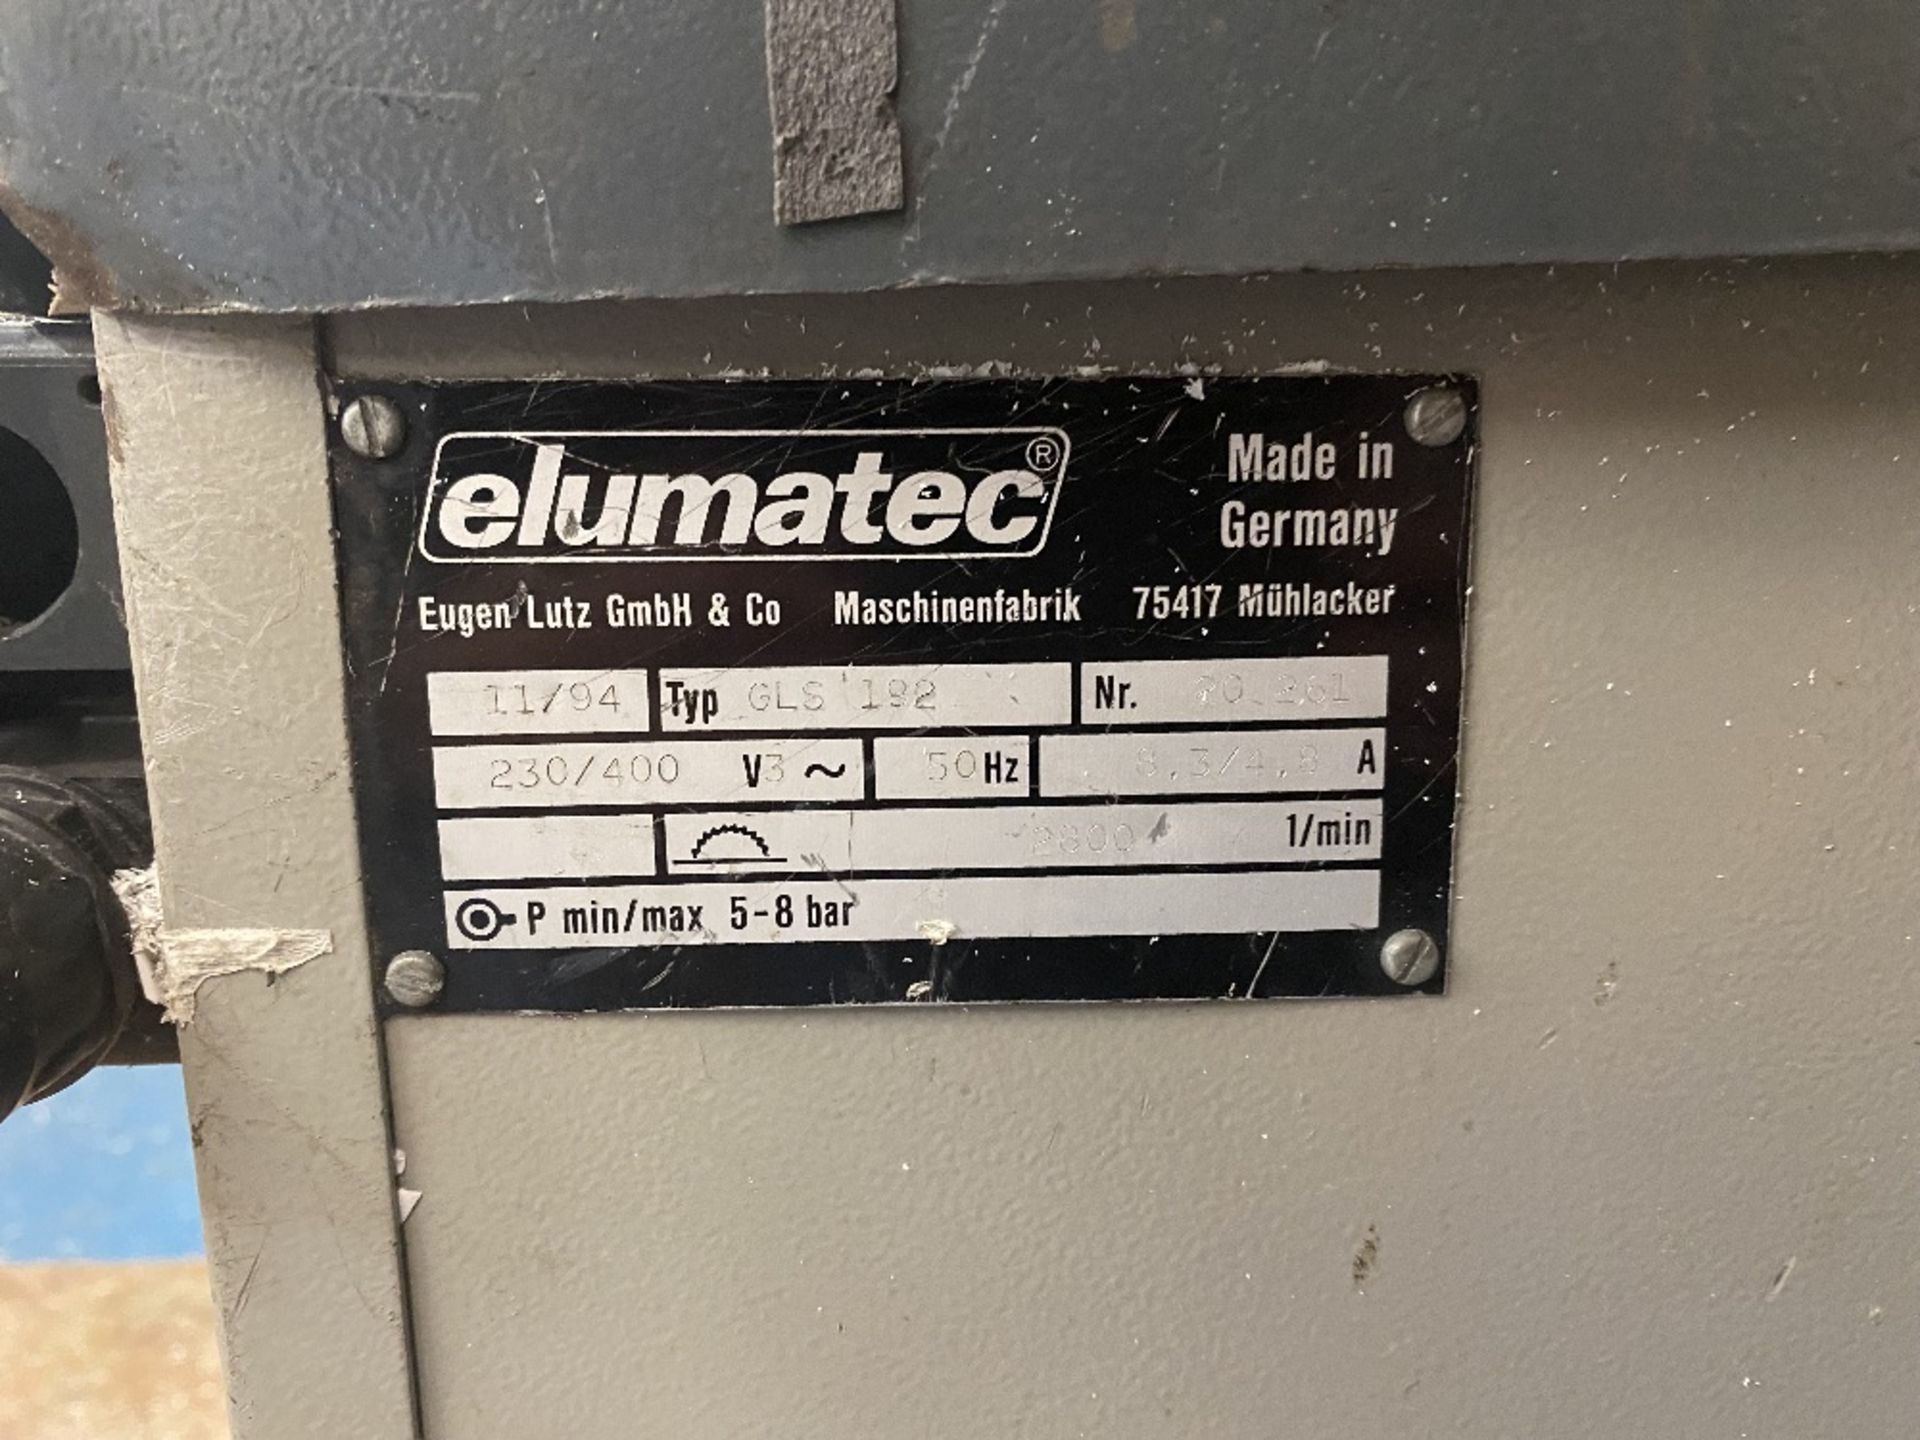 Elumatec GLS192 glazing bead saw, Year of Manufacture 1994, Machine Number 20.261 (METHOD - Image 4 of 4